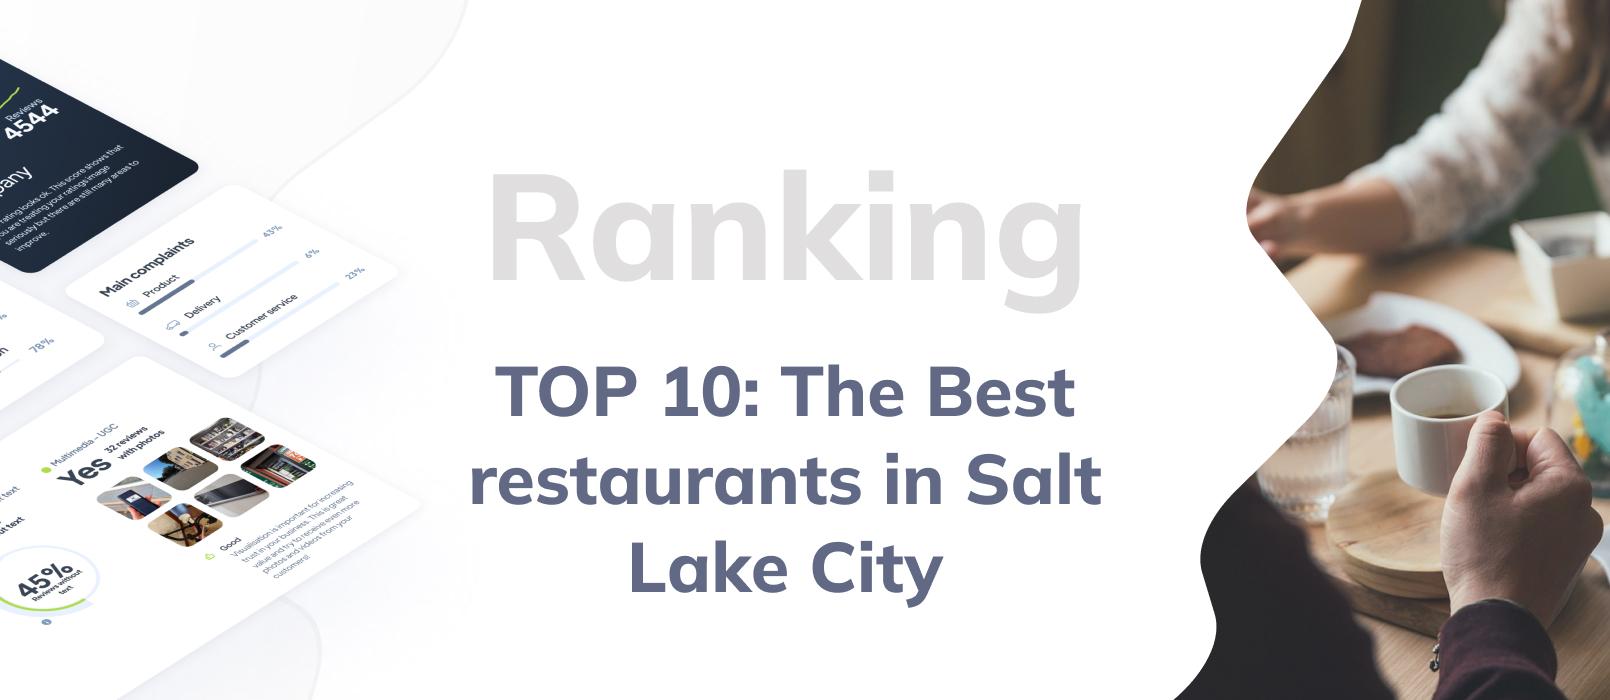 Restaurants in Salt Lake City – TOP 10 ranking